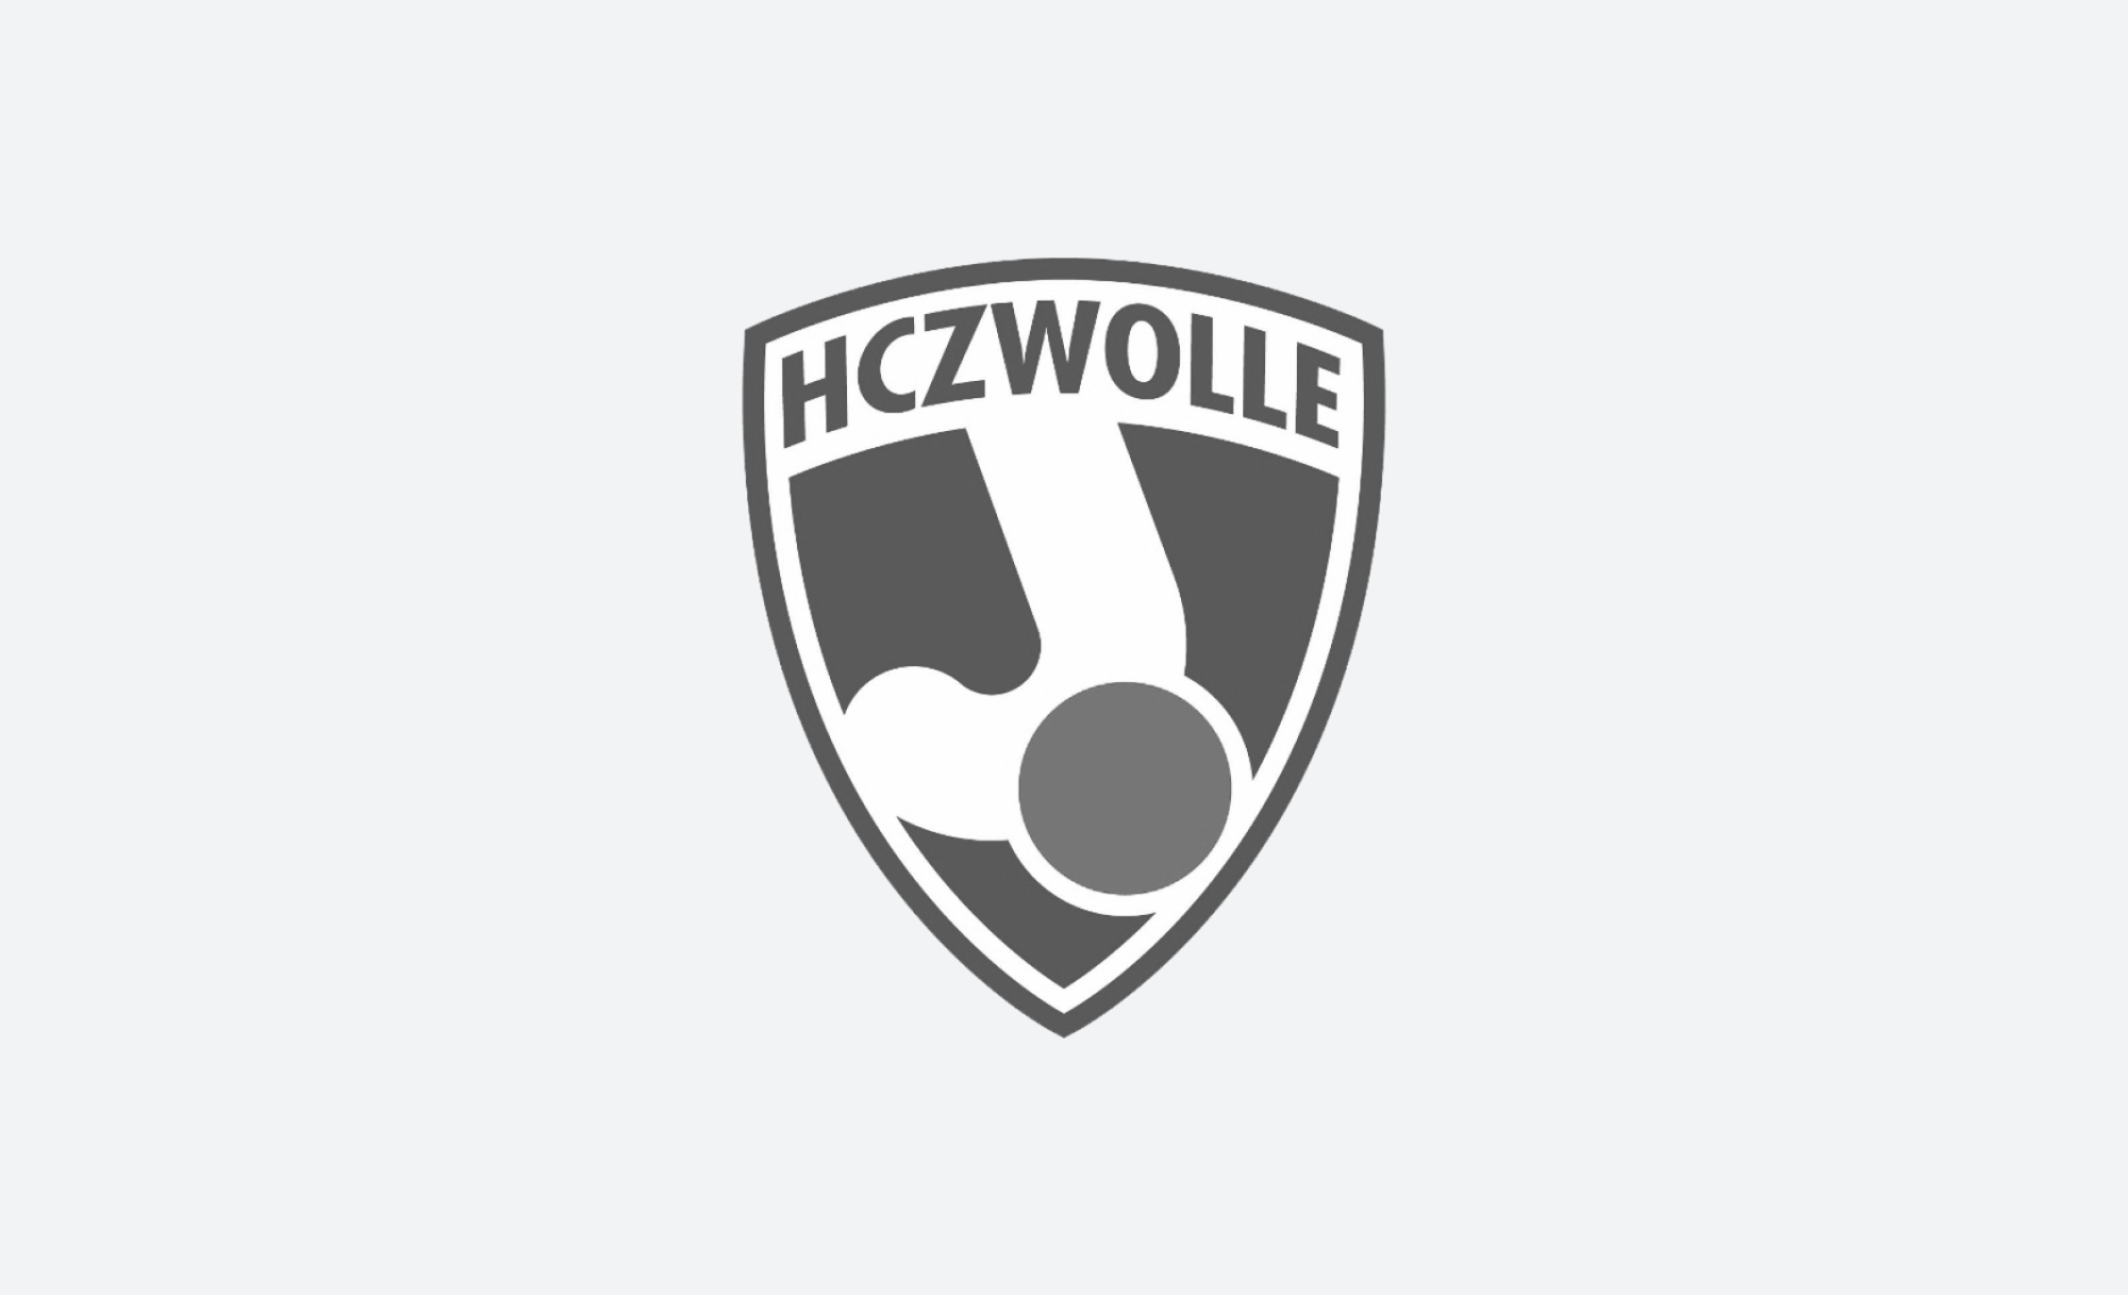 HC Zwolle logo